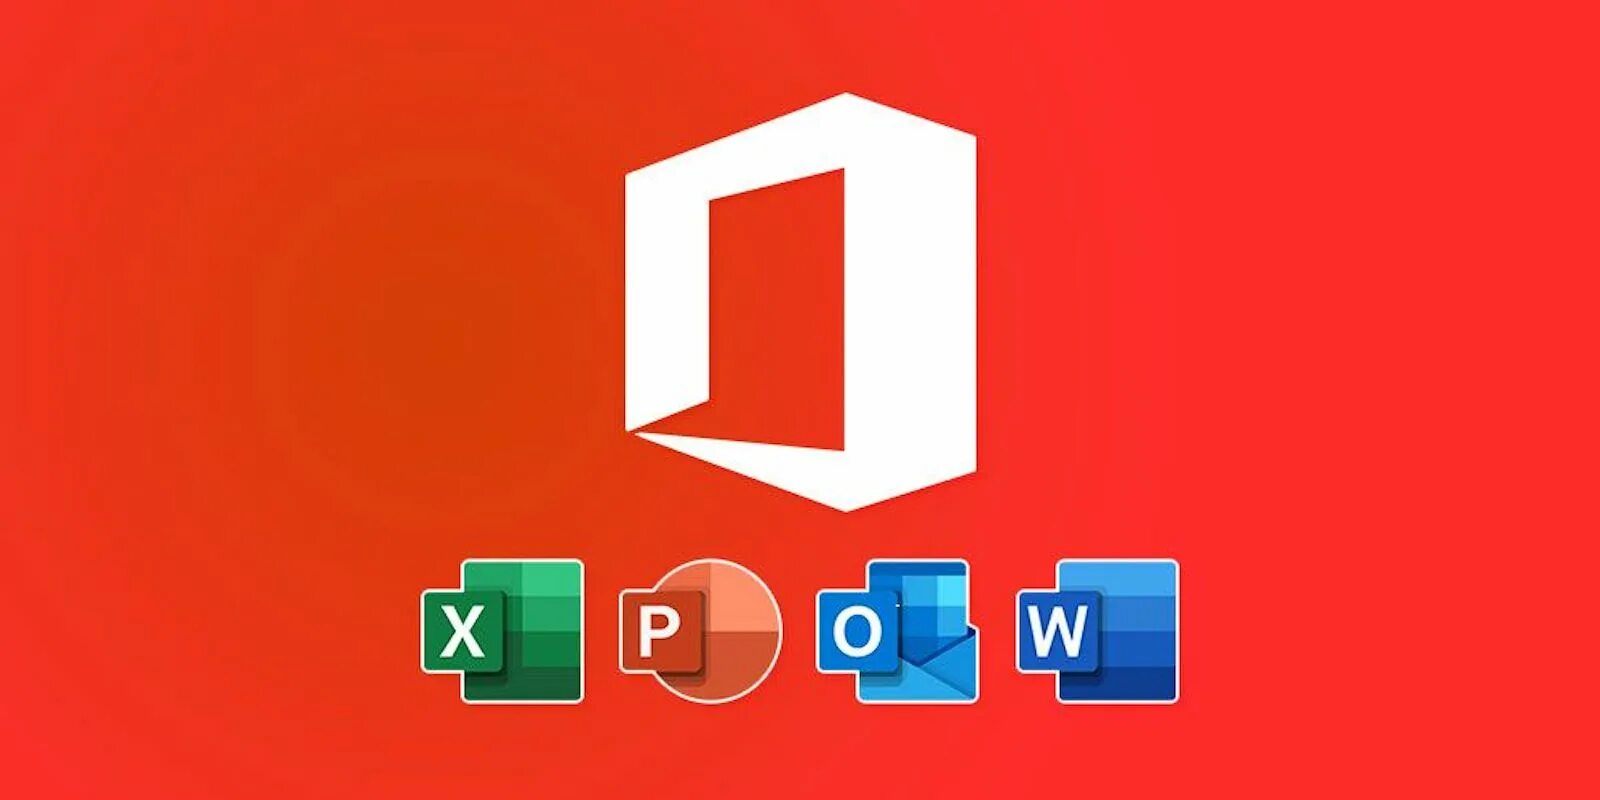 Microsoft Office 2021. Майкрософт офис последняя версия 2021. Microsoft Office 2021 for Mac. Логотип MS Office 2021. Микрософт офис 2021